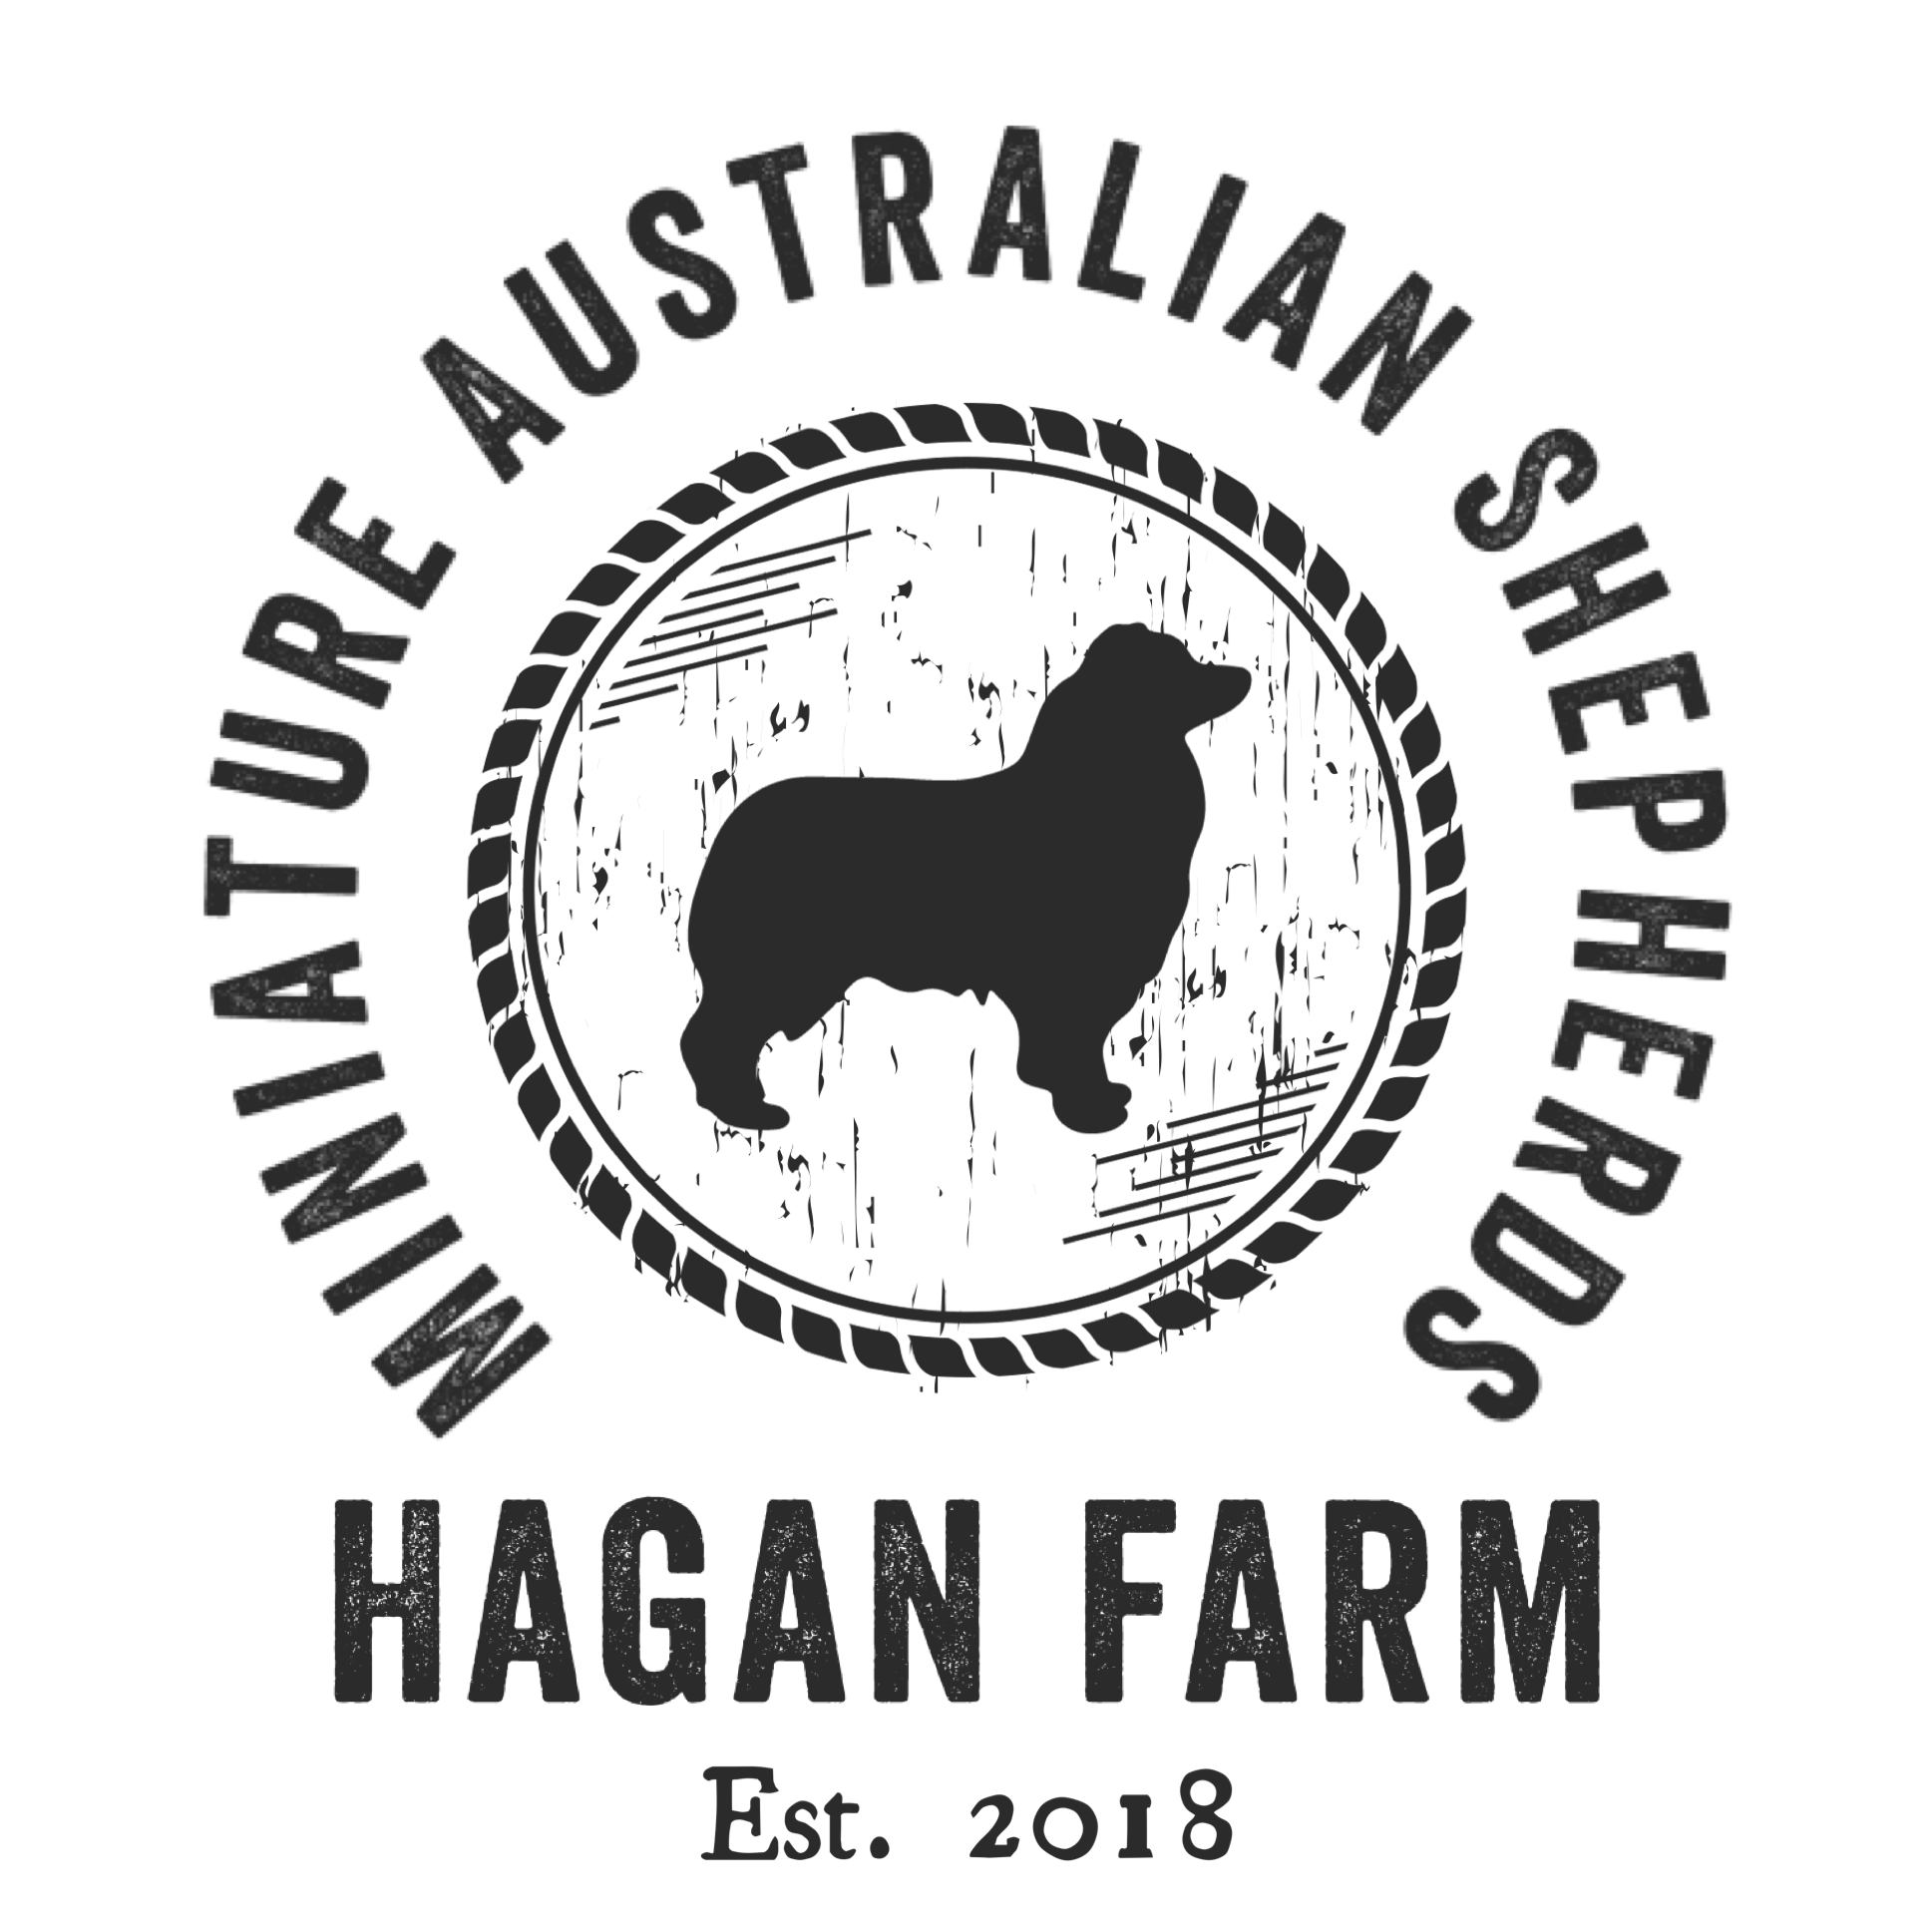 Hagan Farm